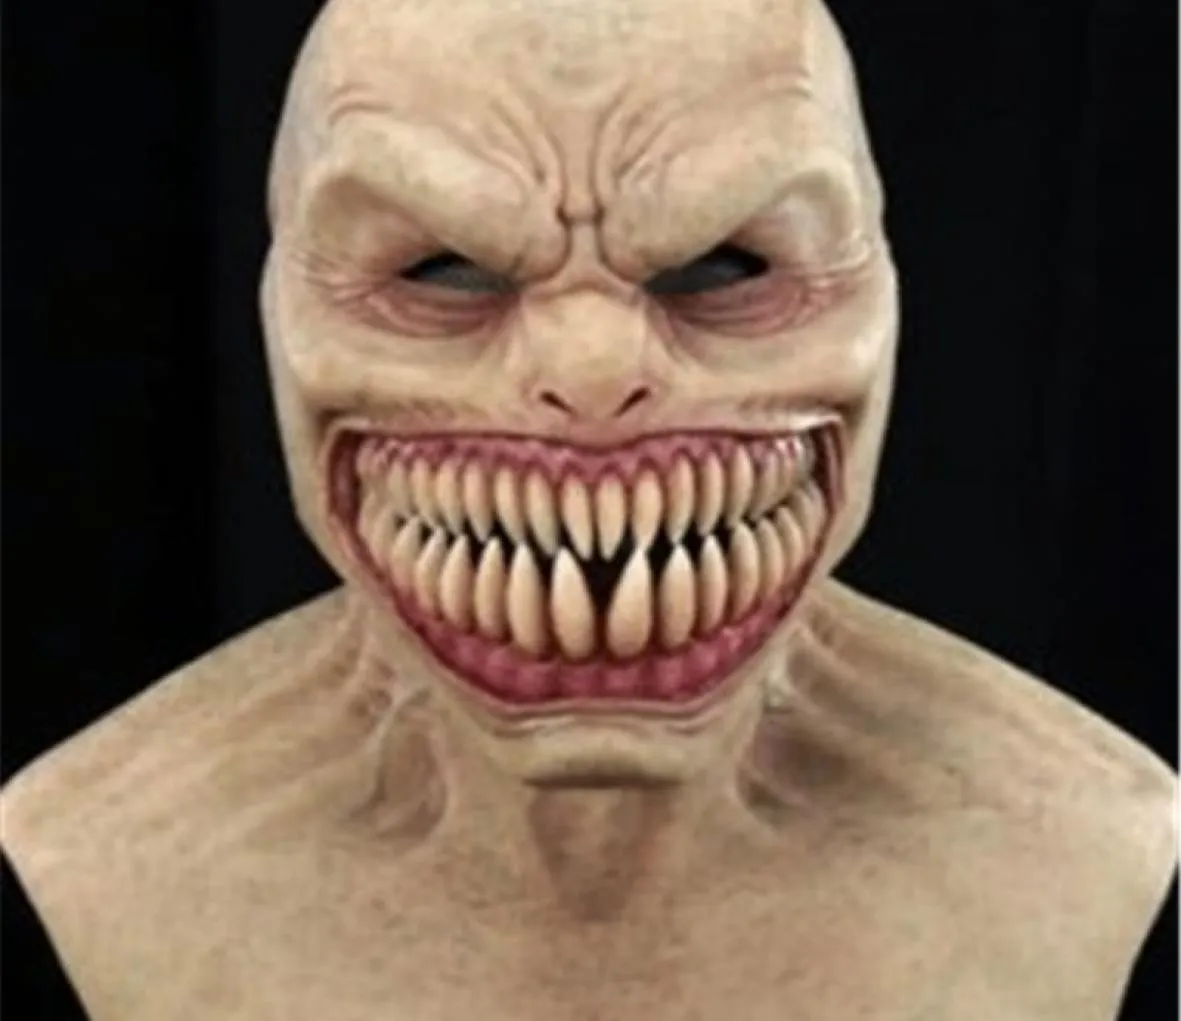 Nowy horror Stalker Mask Cosplay Creepy Monster Big Mouth Teeth Chompers LaTex Maski Halloween Party Przerażające kostiumy Q08063427381